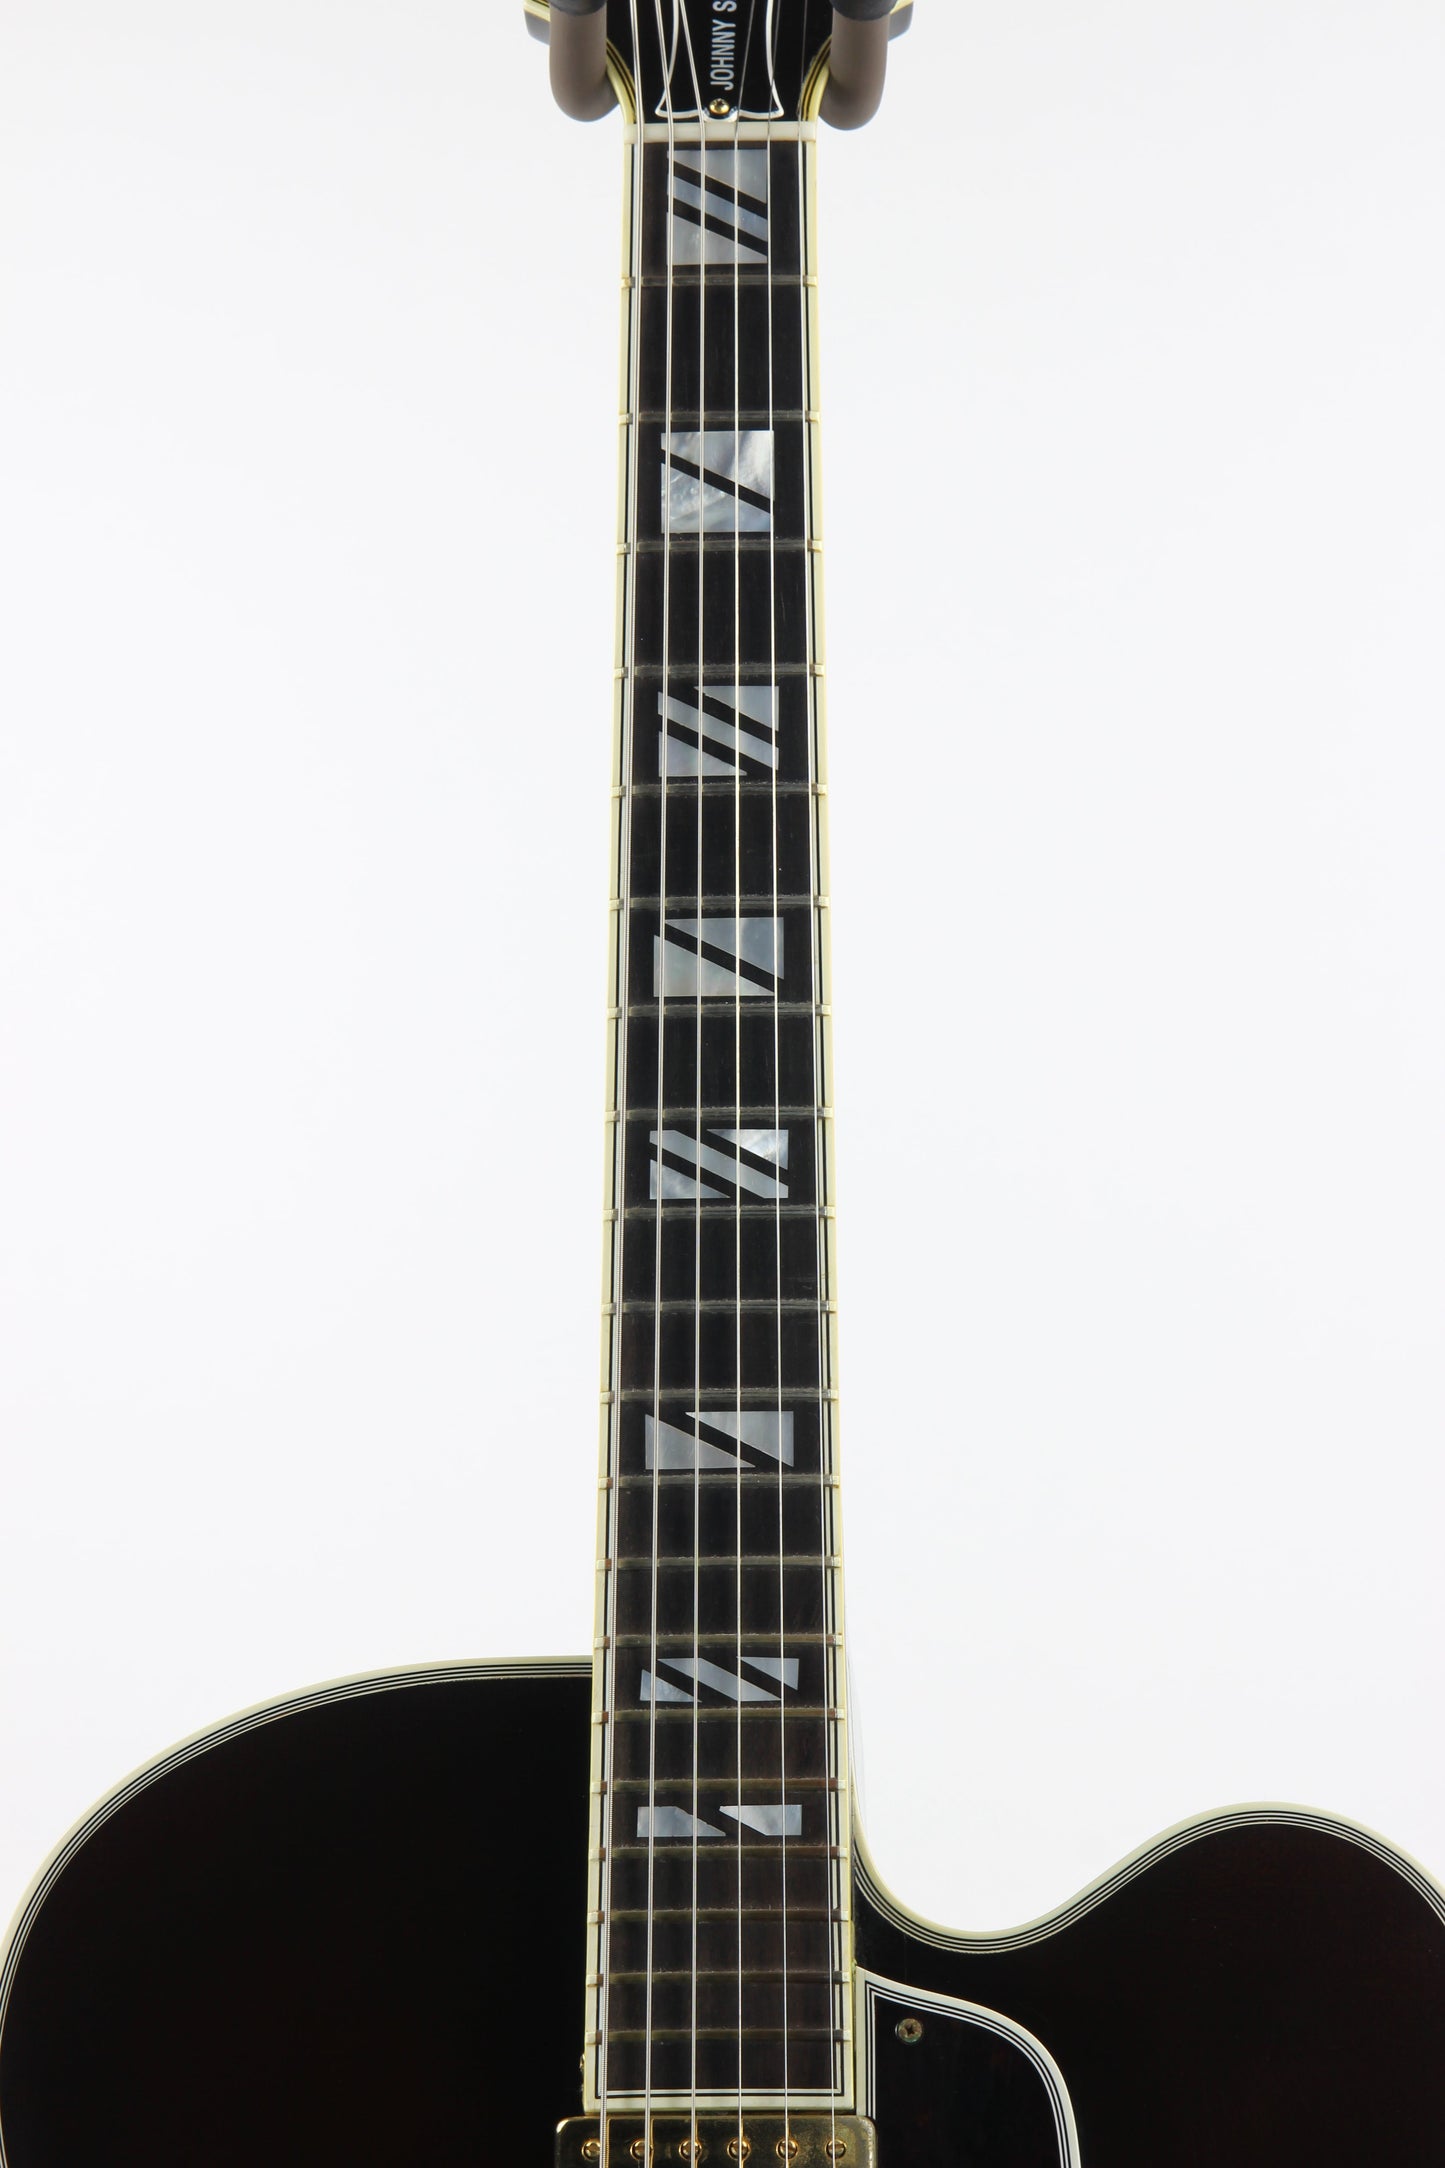 1988 Gibson Master Model Johnny Smith - L-5, Super 400 Specs James Hutchins, Sunburst Le Grand